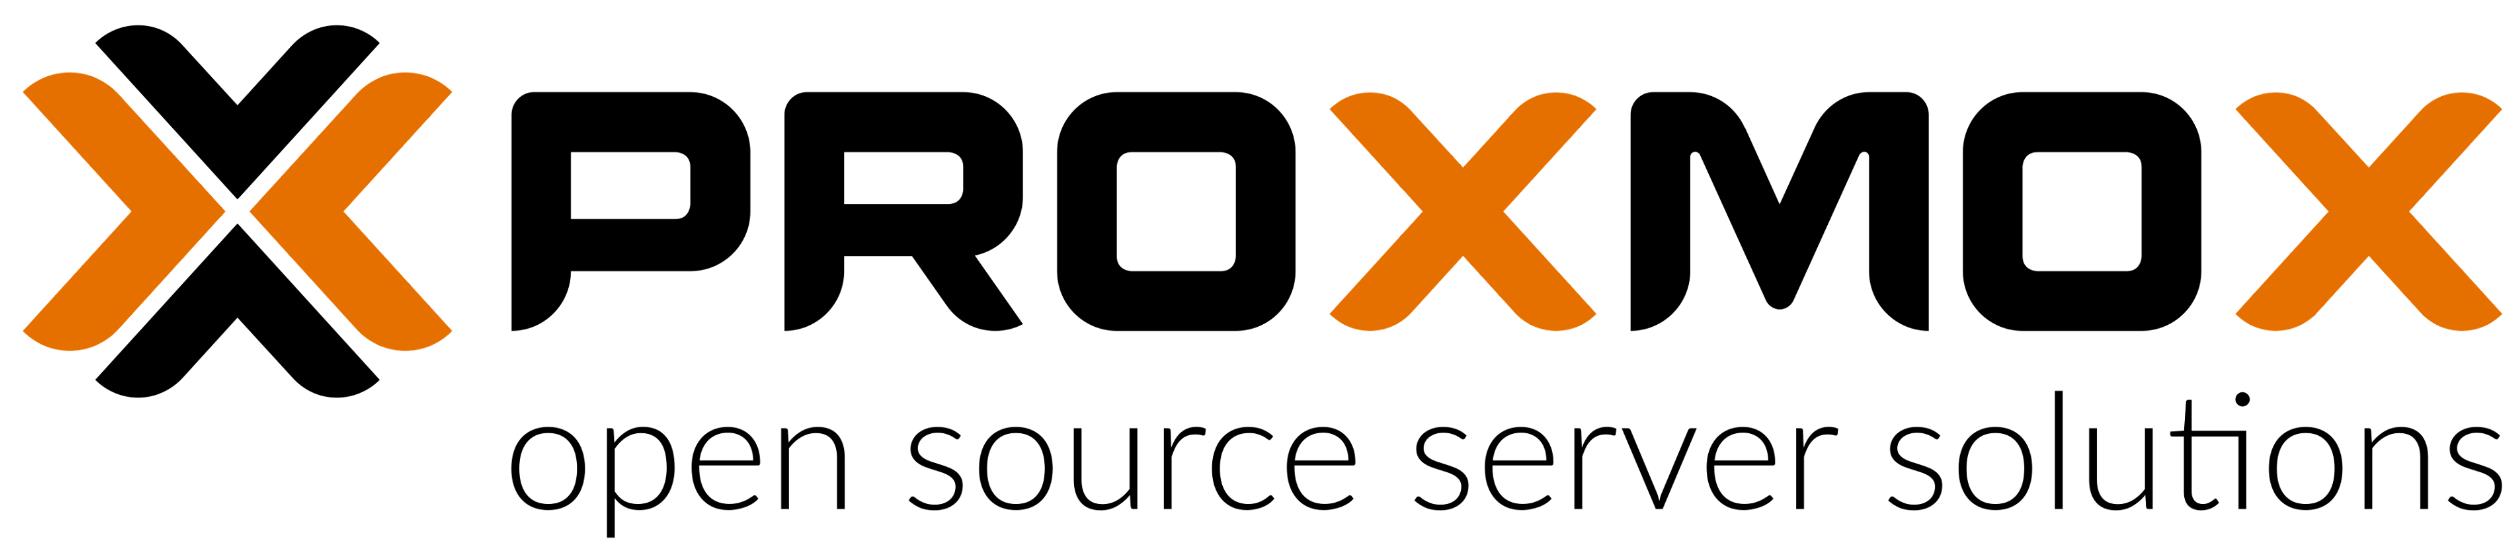 Proxmox Monitoring mit Checkmk